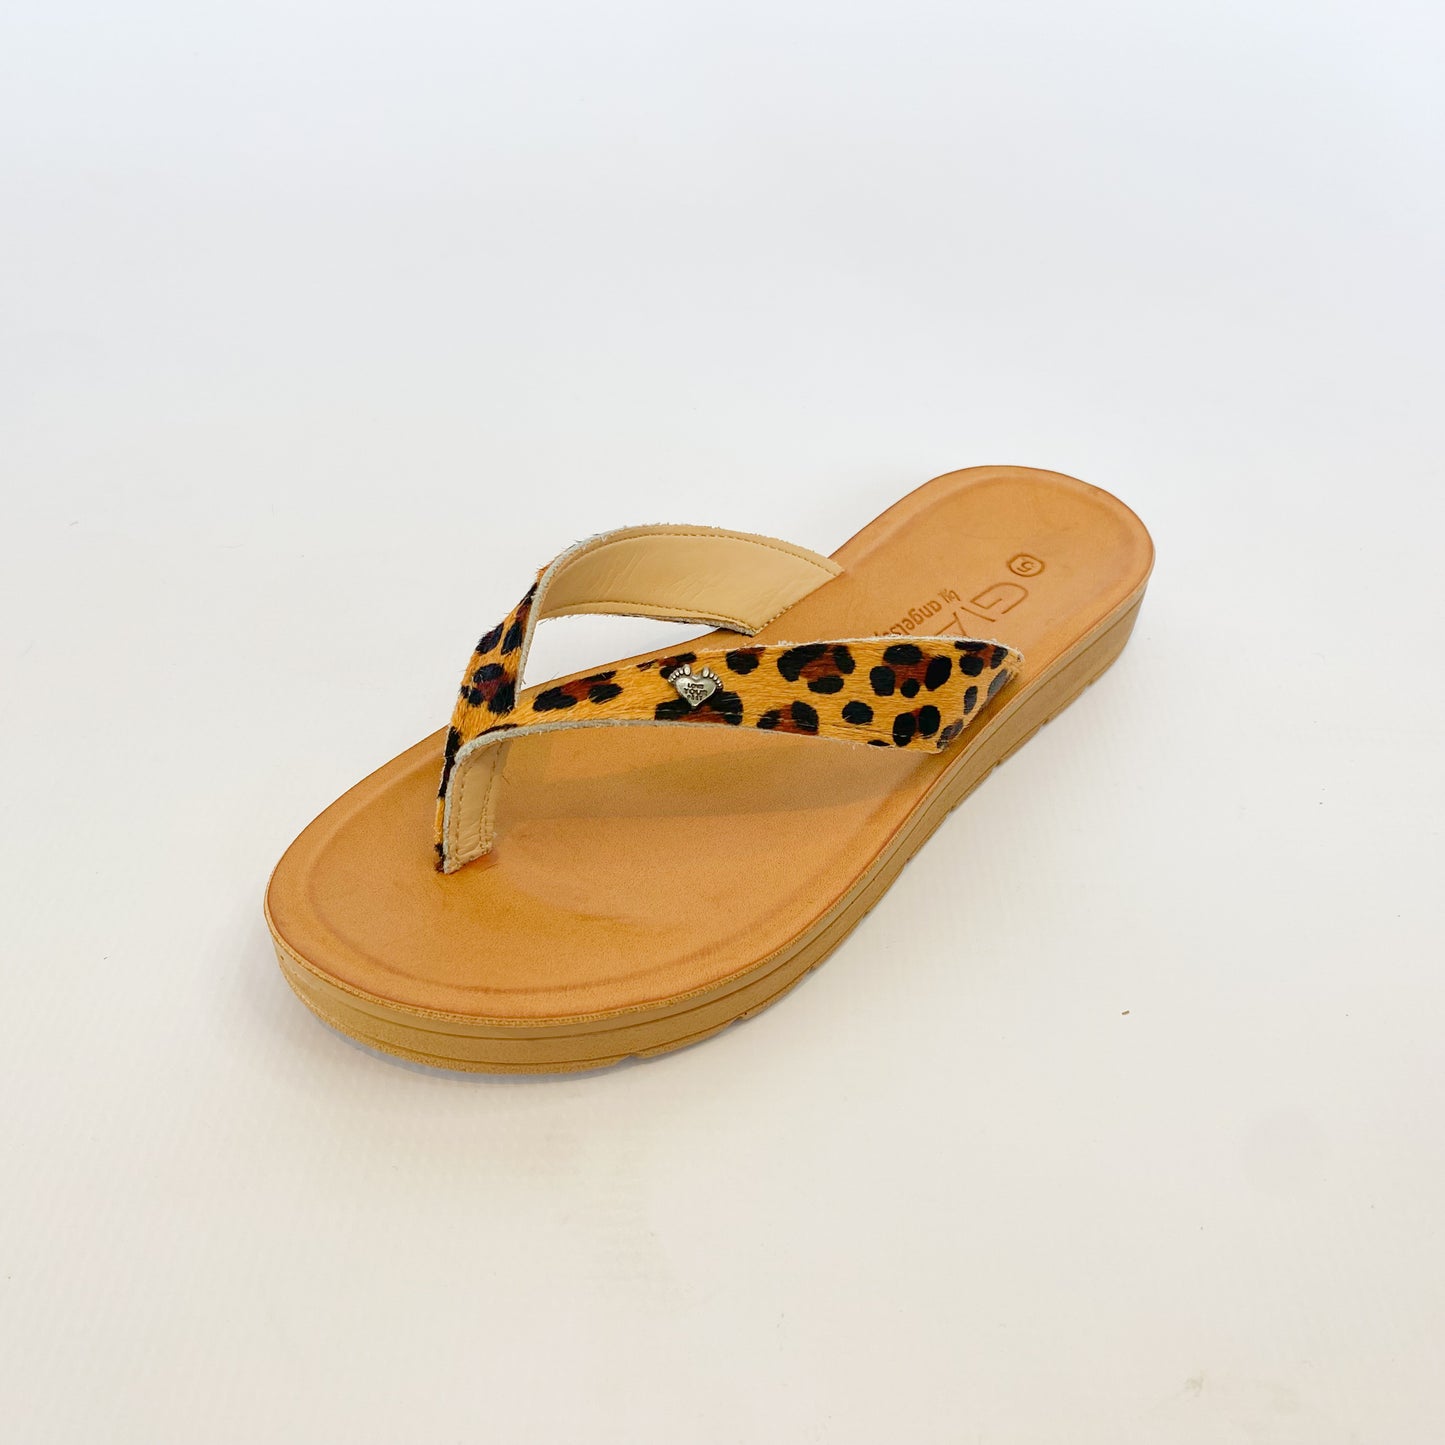 Gia leather cheetah thong sandal